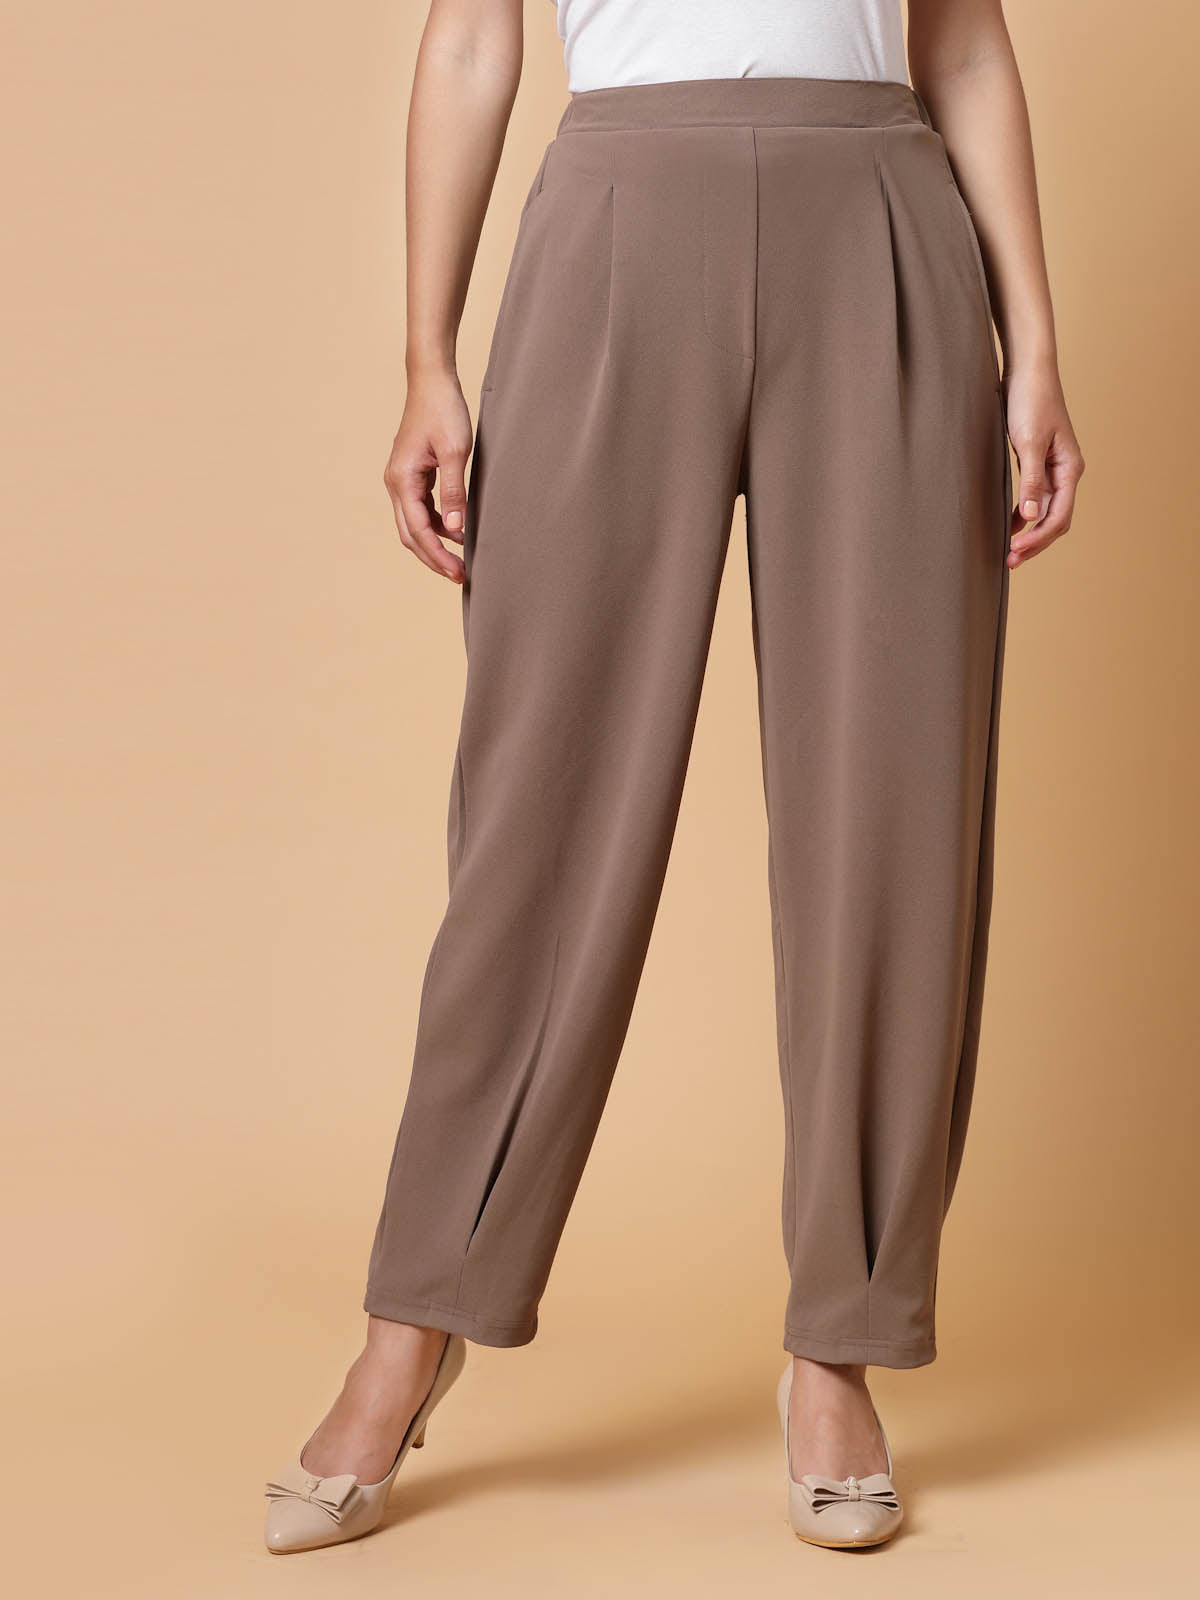 Eri Silk Easy pleated pants with cross pockets. – URA MAKU